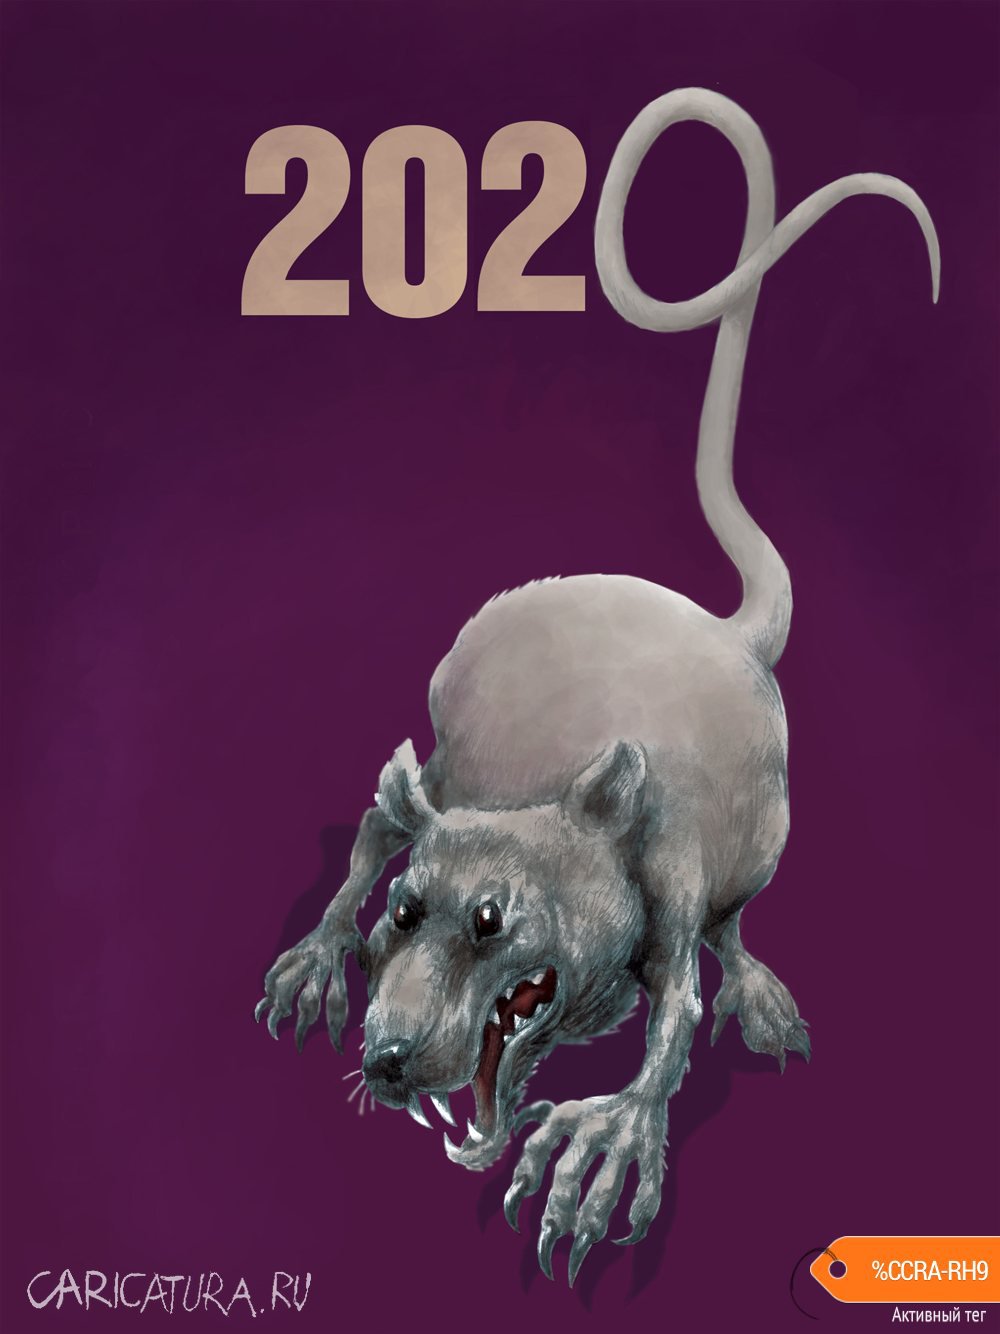 Плакат "2020 (ремикс)", Михаил Жилкин